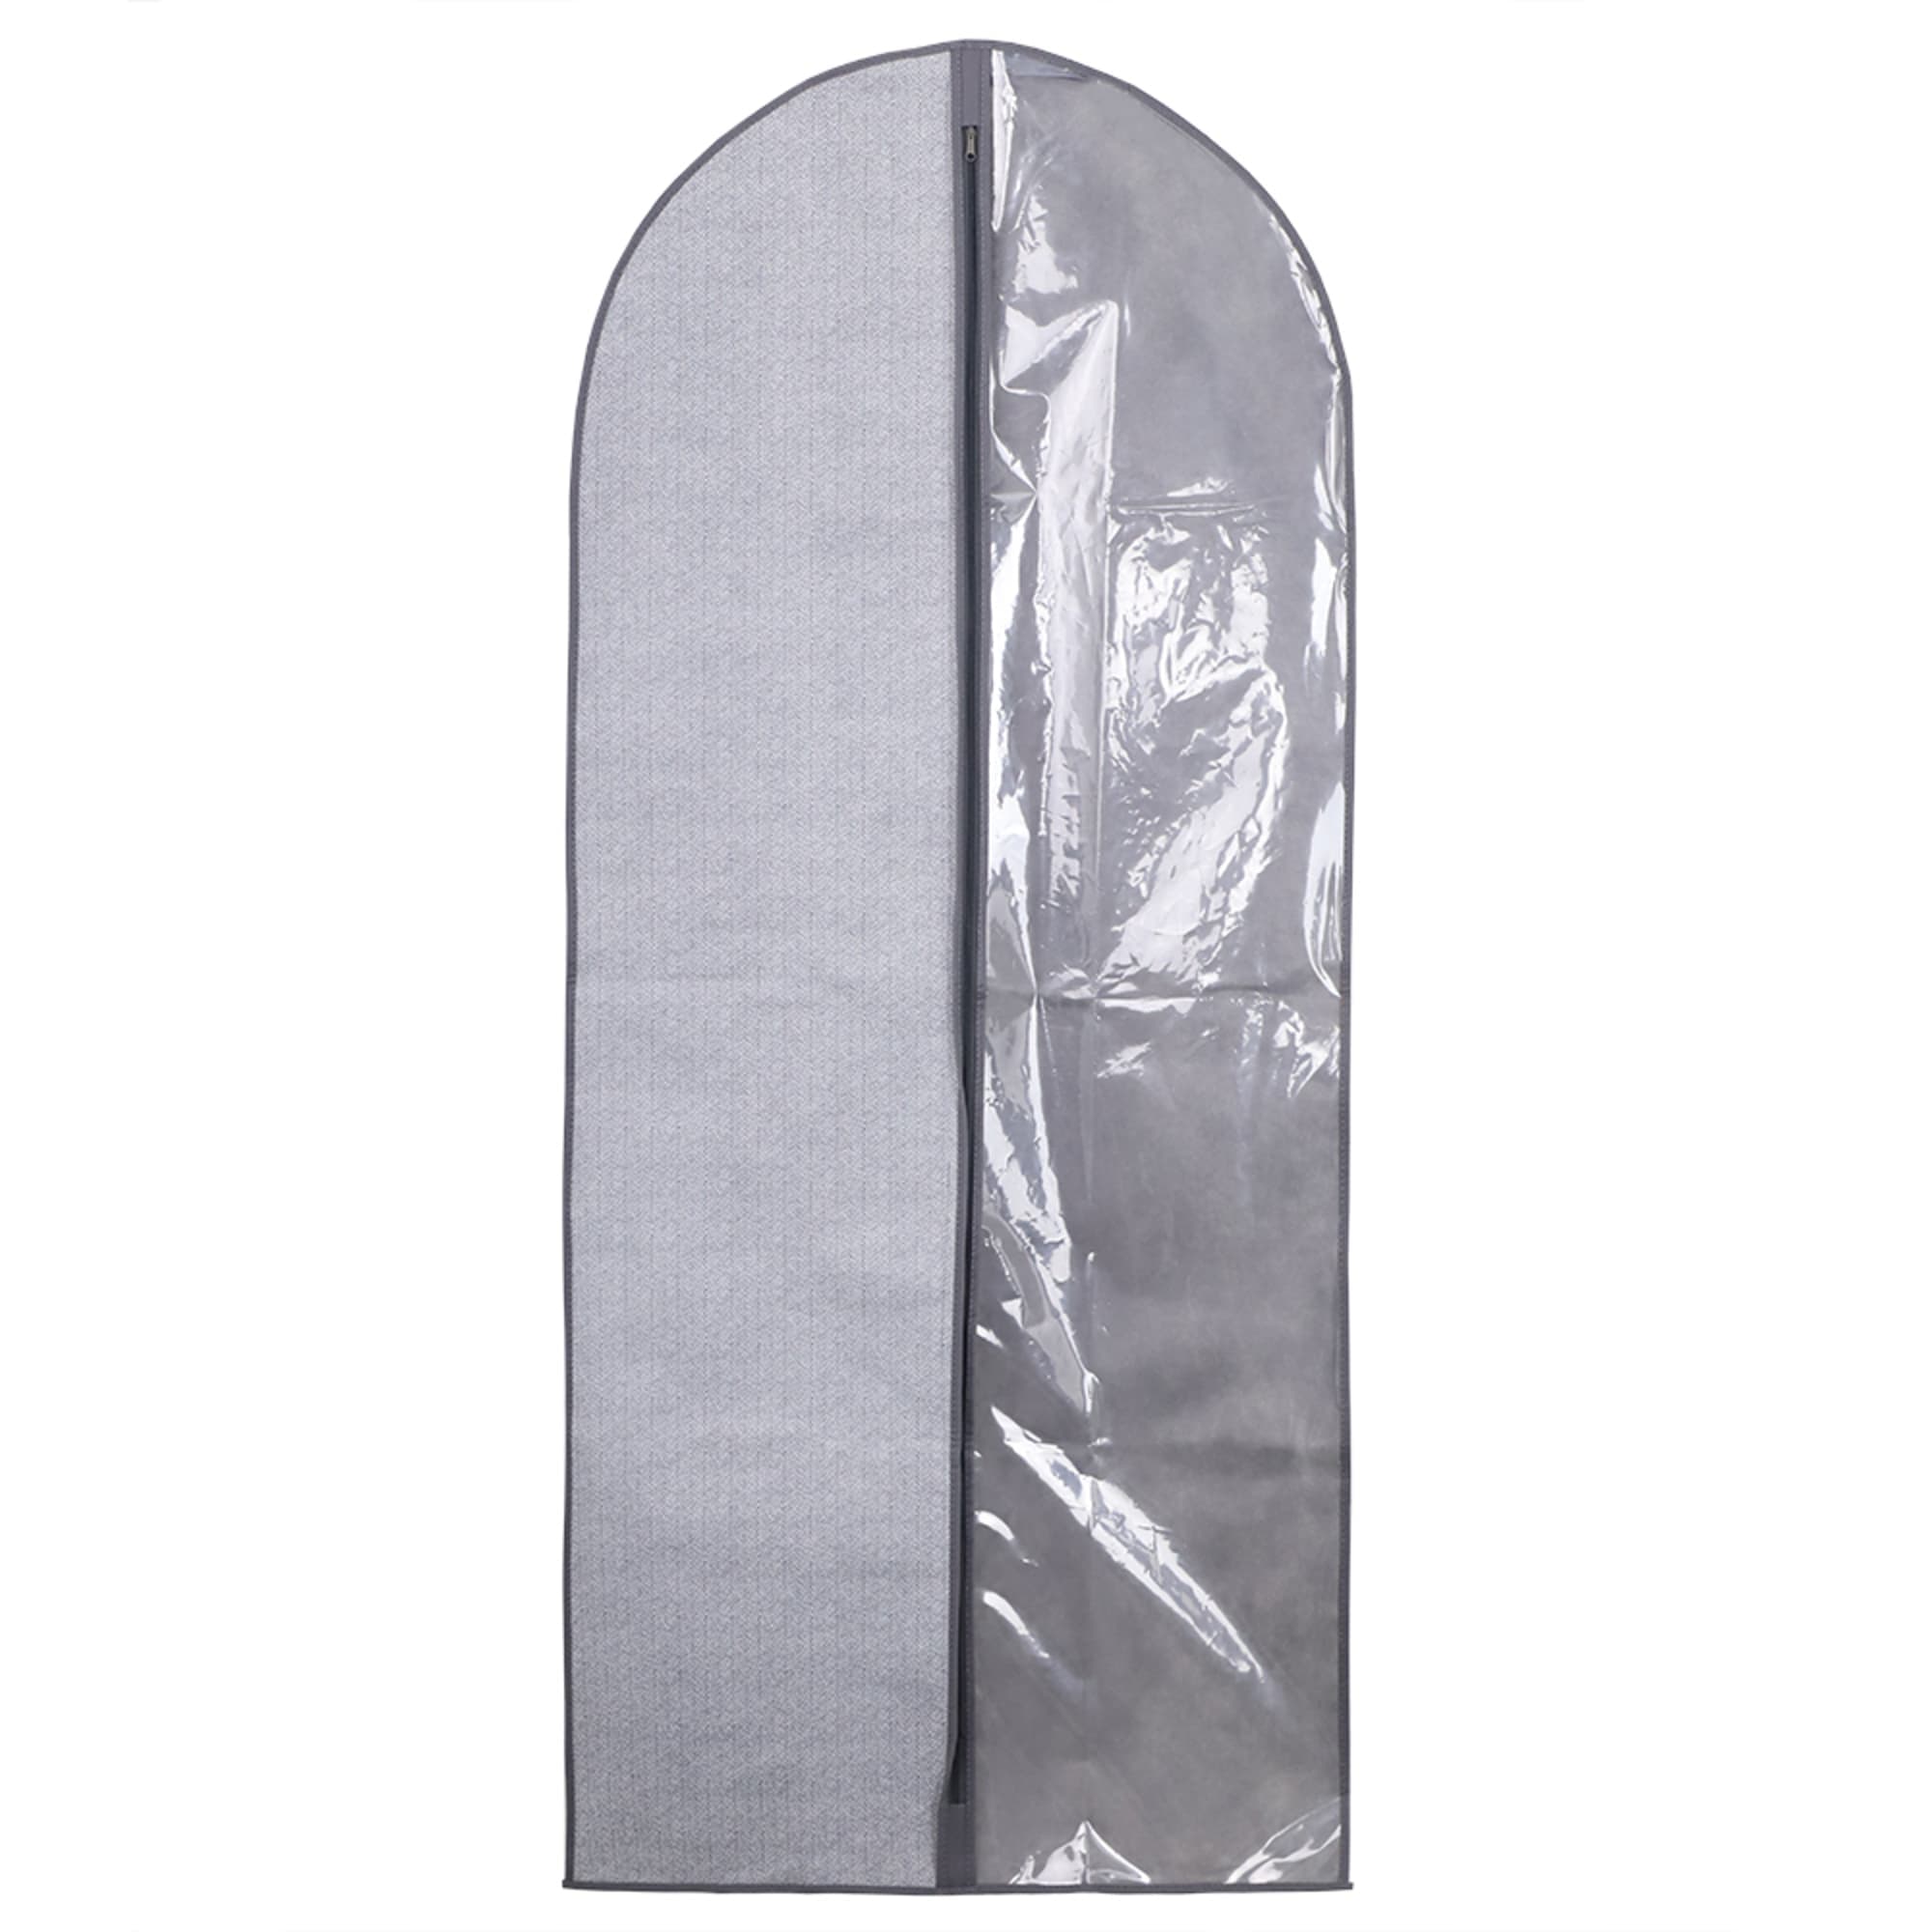 Home Basics Basics Herringbone Non-Woven Garment Bag with Clear Plastic Panel, Grey $3.00 EACH, CASE PACK OF 12